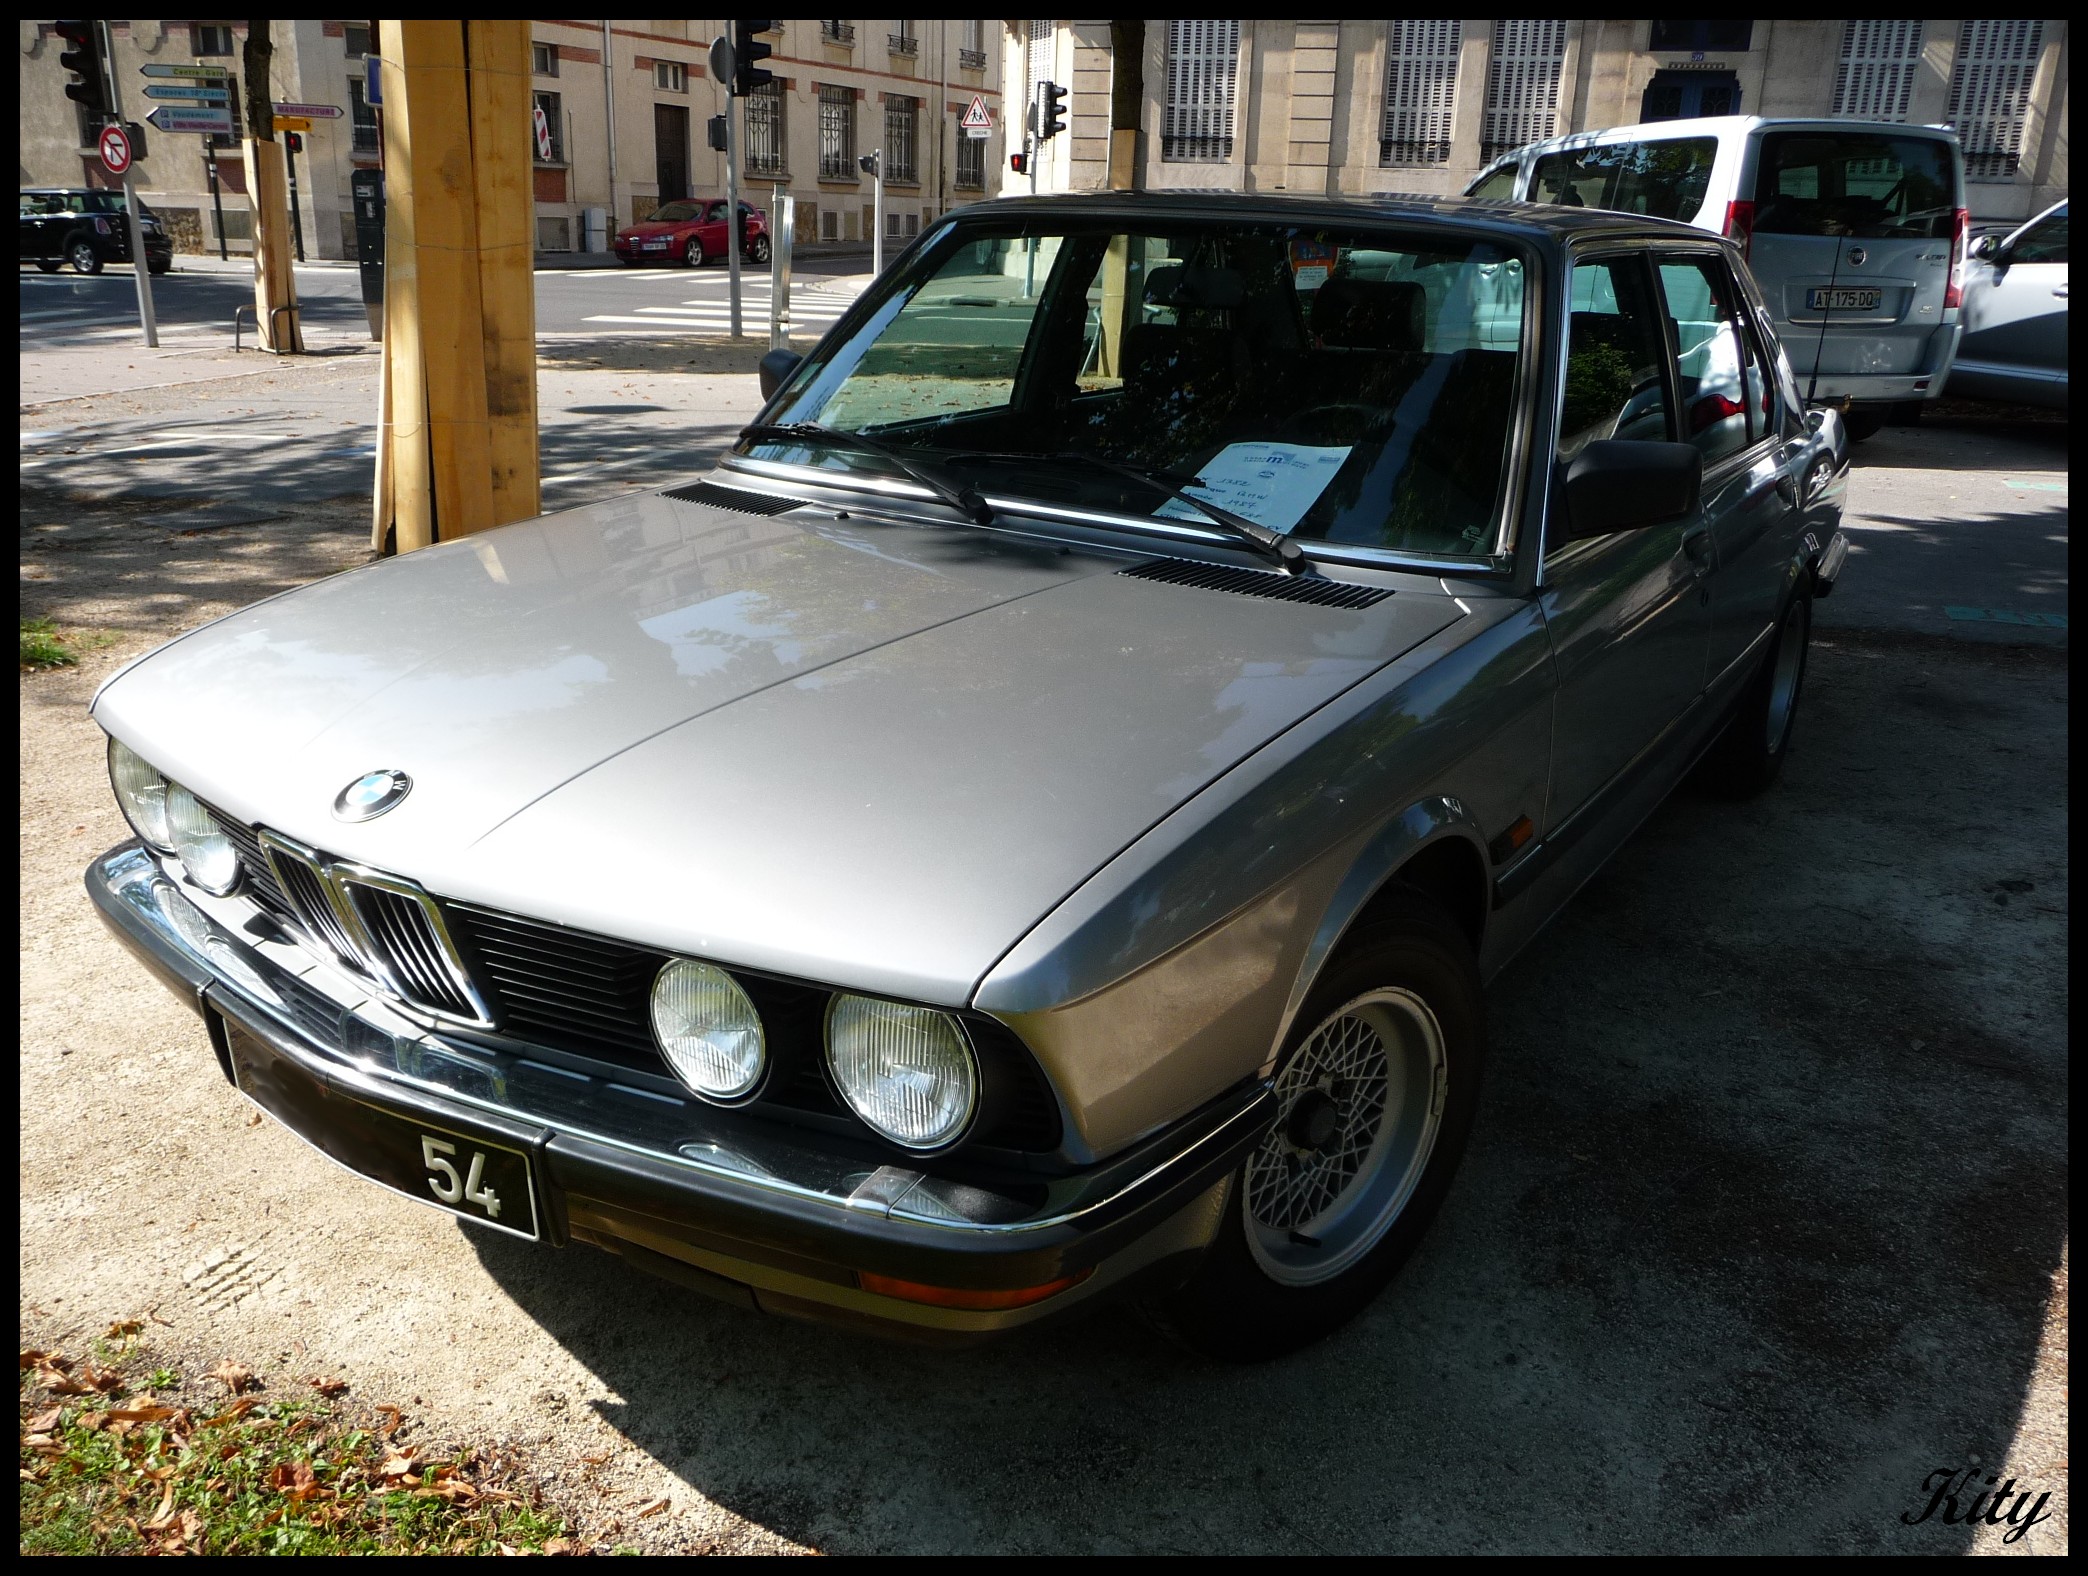 BMW 518i - 1987 | Flickr - Photo Sharing!